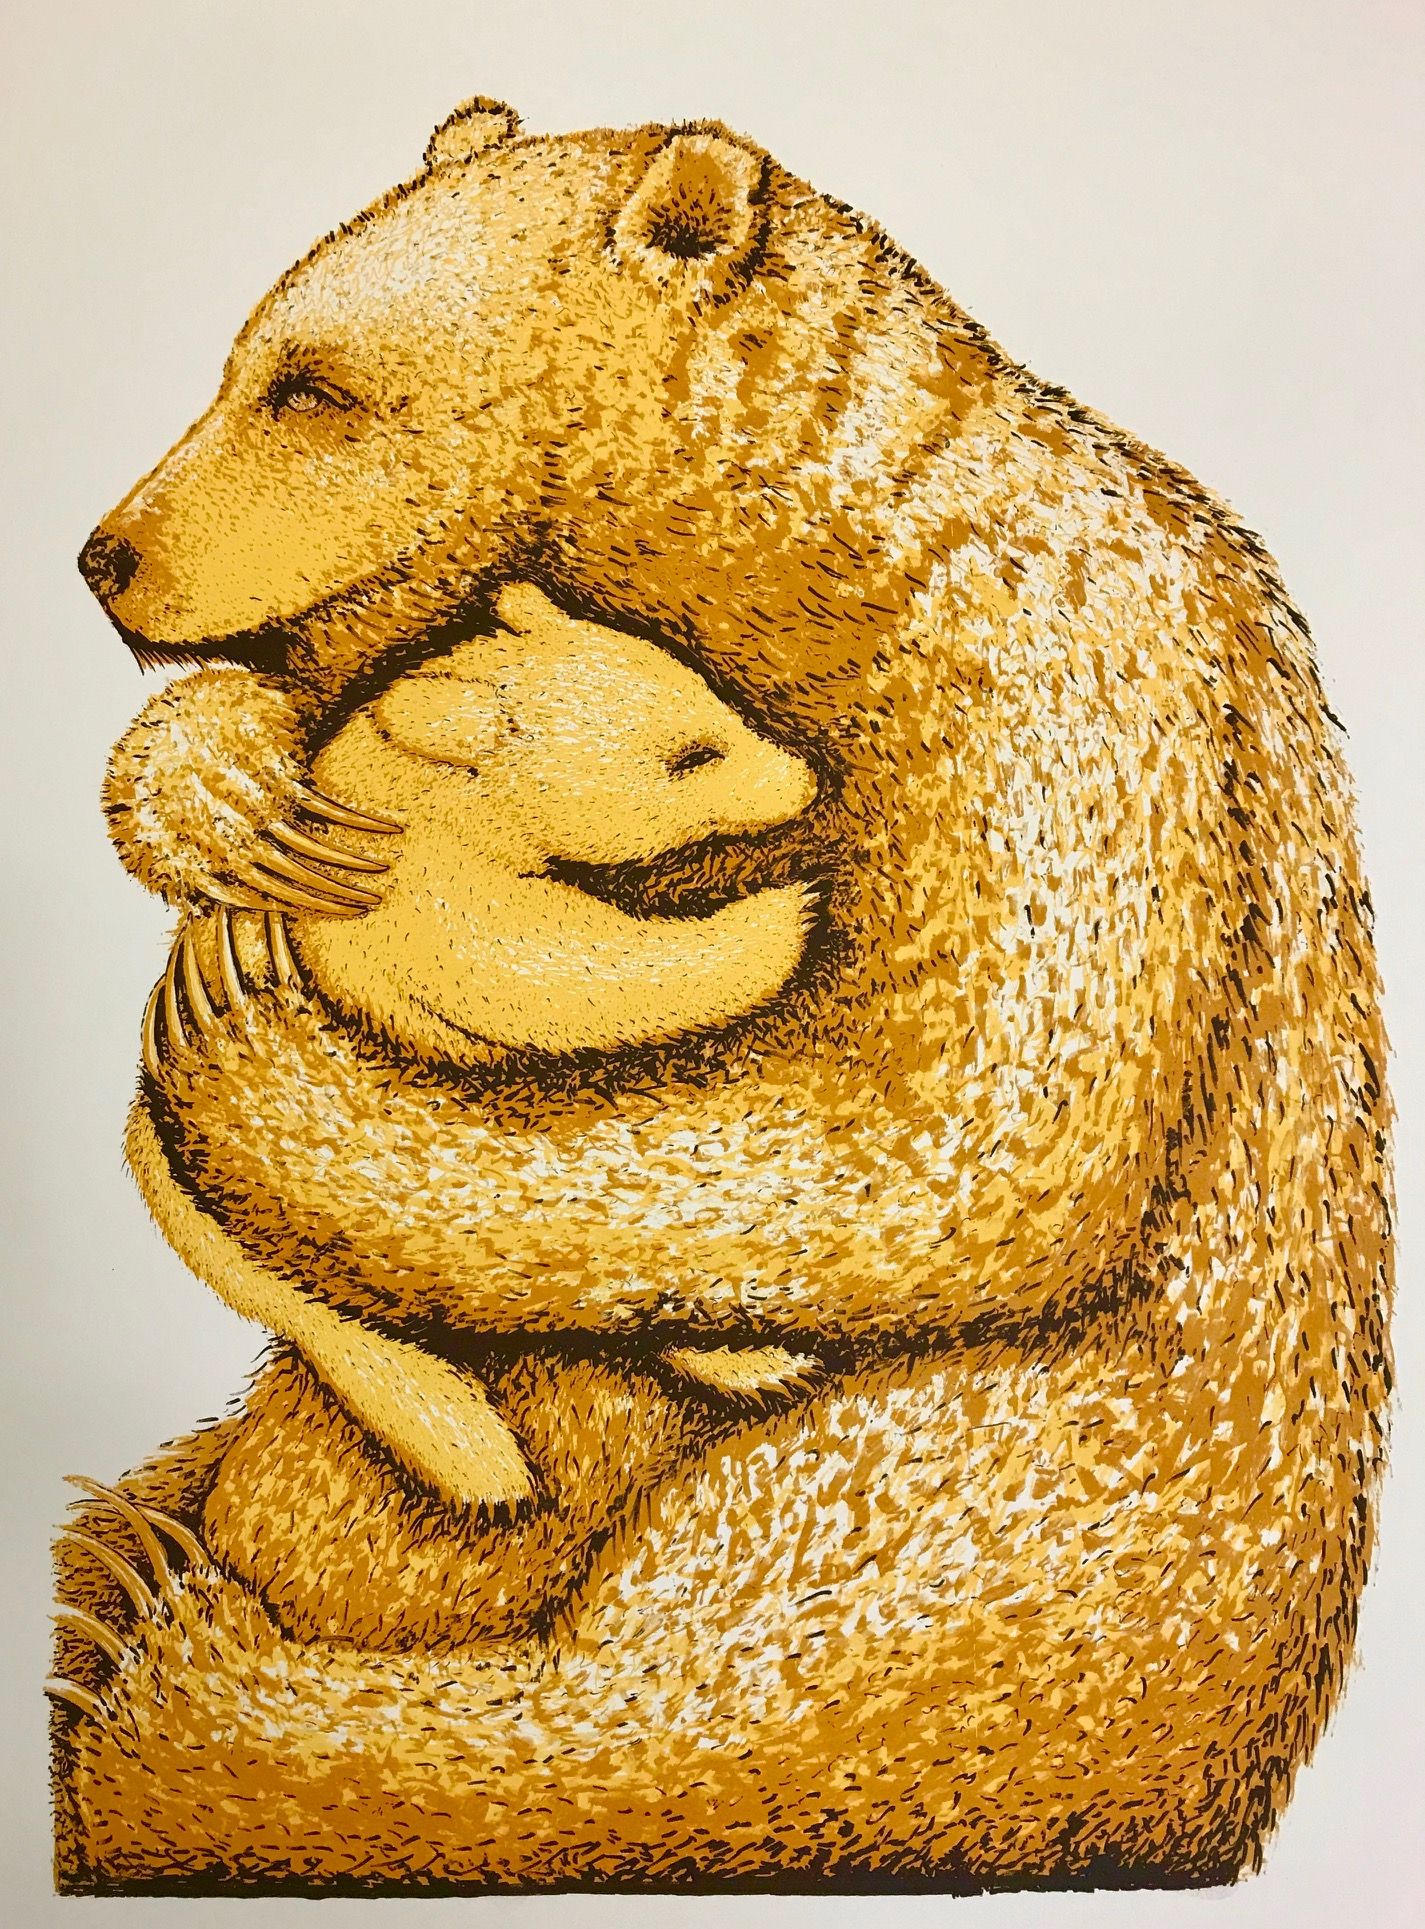 Bear Hugs (Gold) by Tim Southall